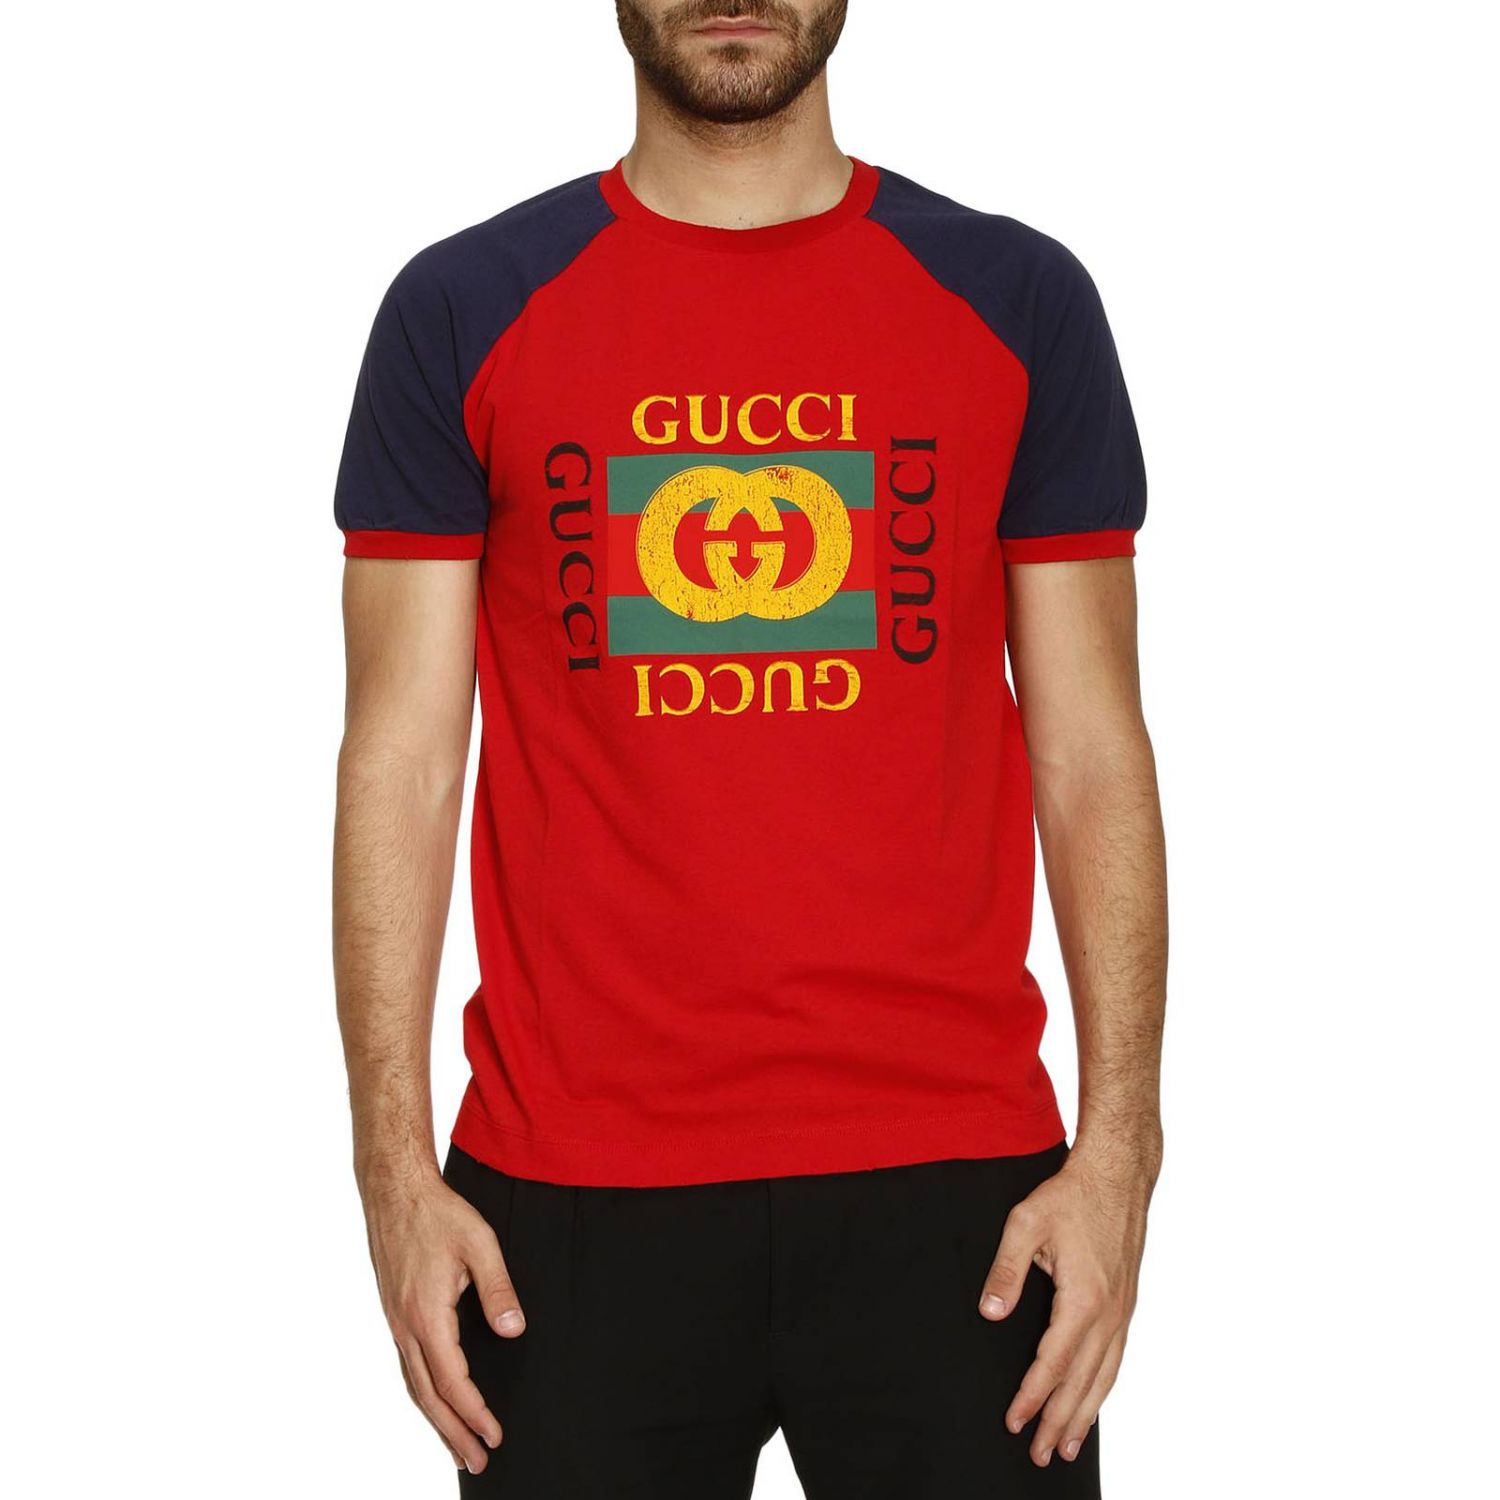 gucci t shirt new design